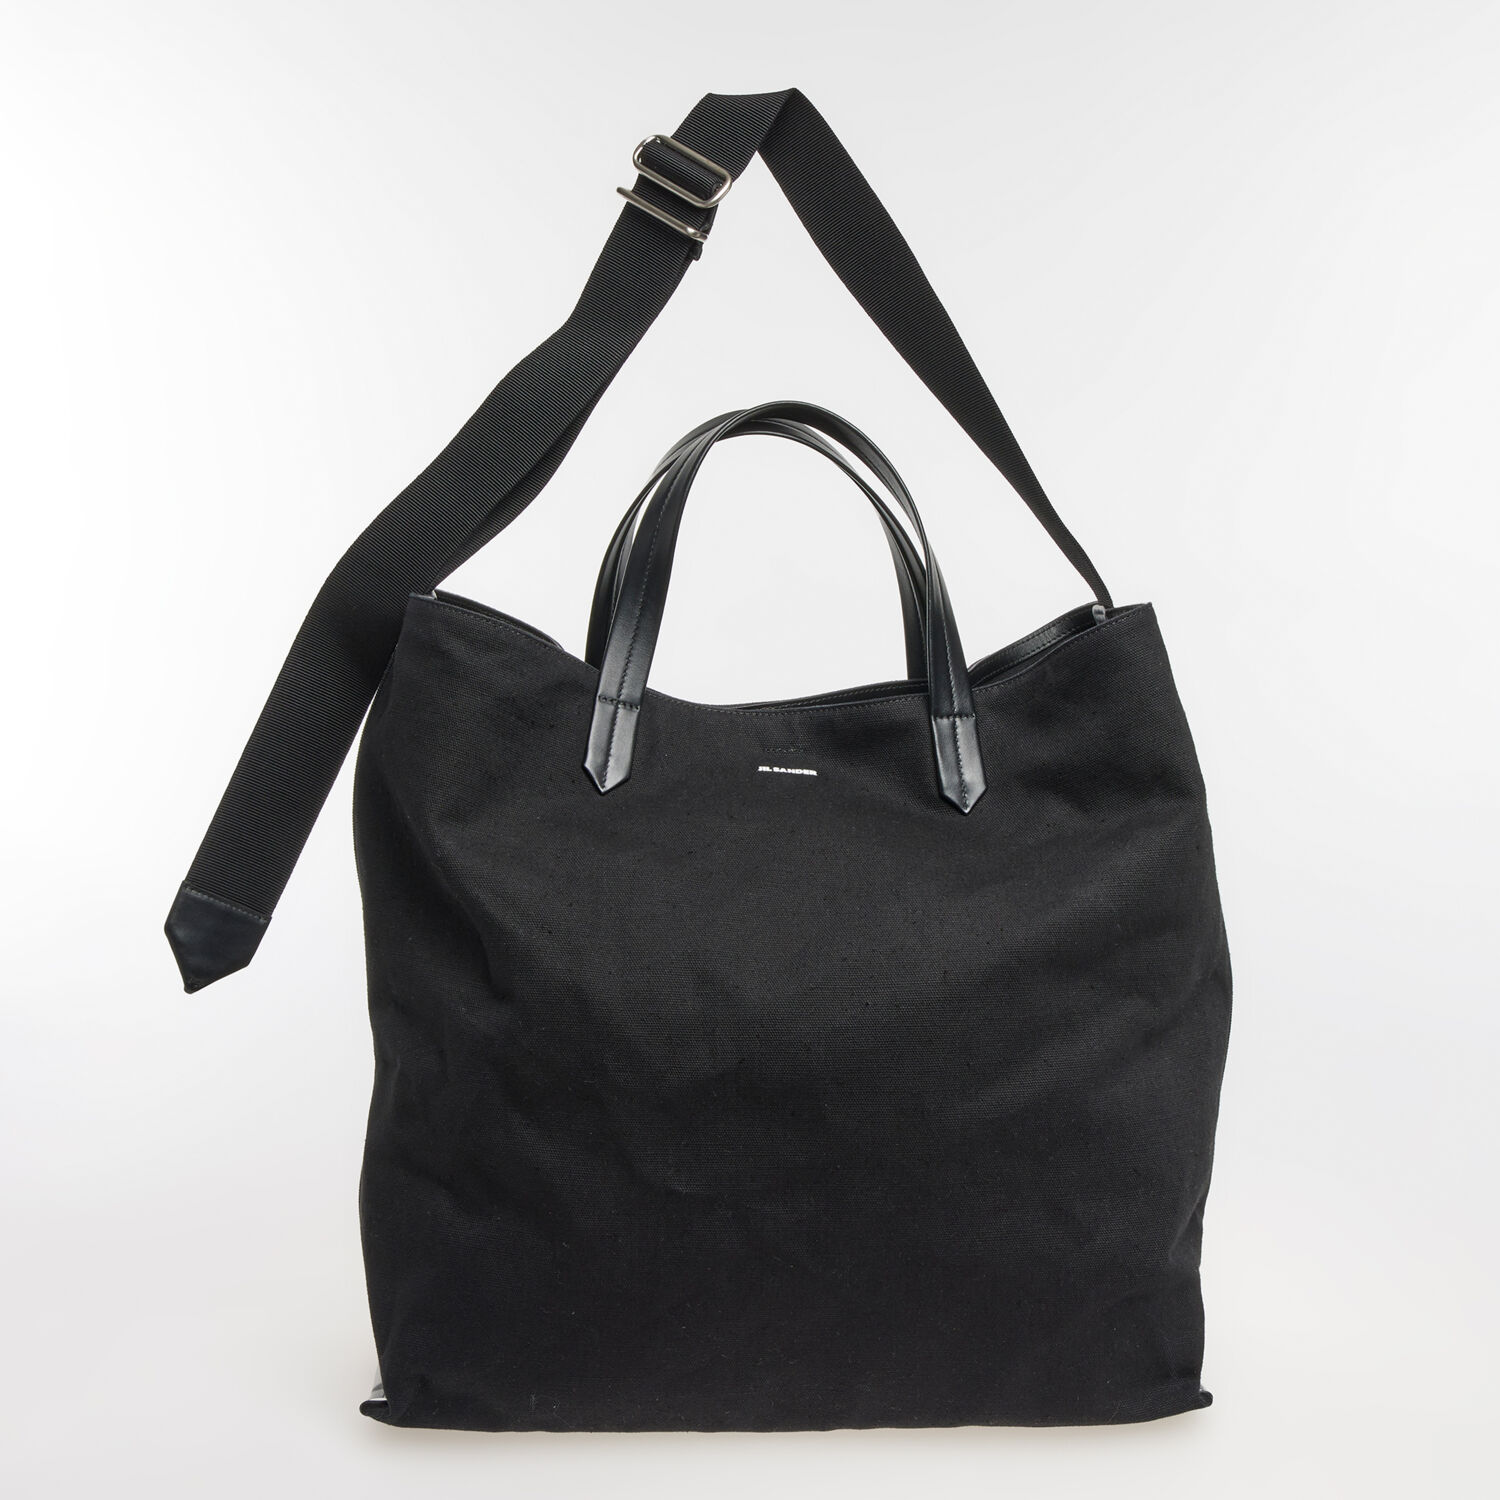 Black Canvas Tote Bag - TK Maxx UK